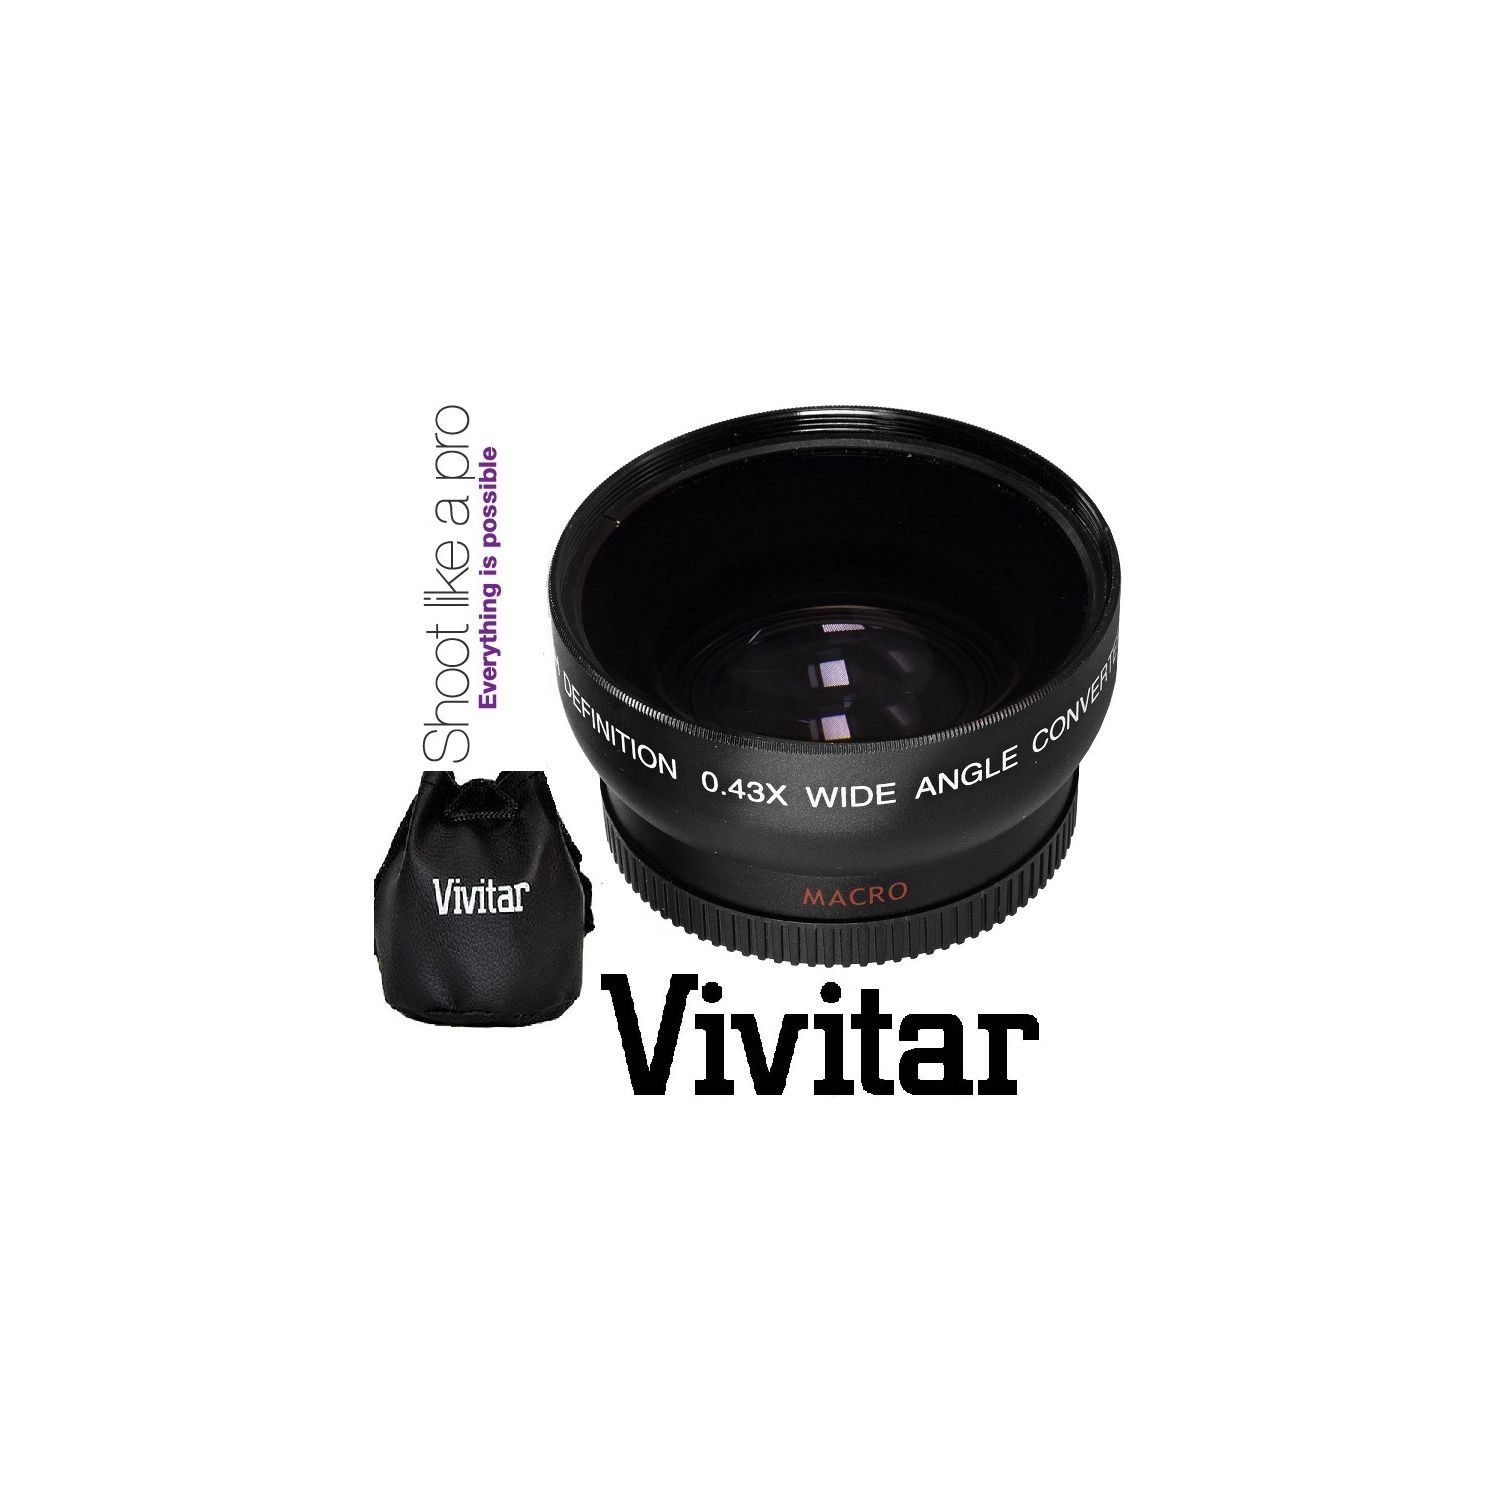 For Nikon J1 V1 J3 V2 J2 S1 New Hi Def Wide Angle With Macro Lens (40.5mm Compatible)